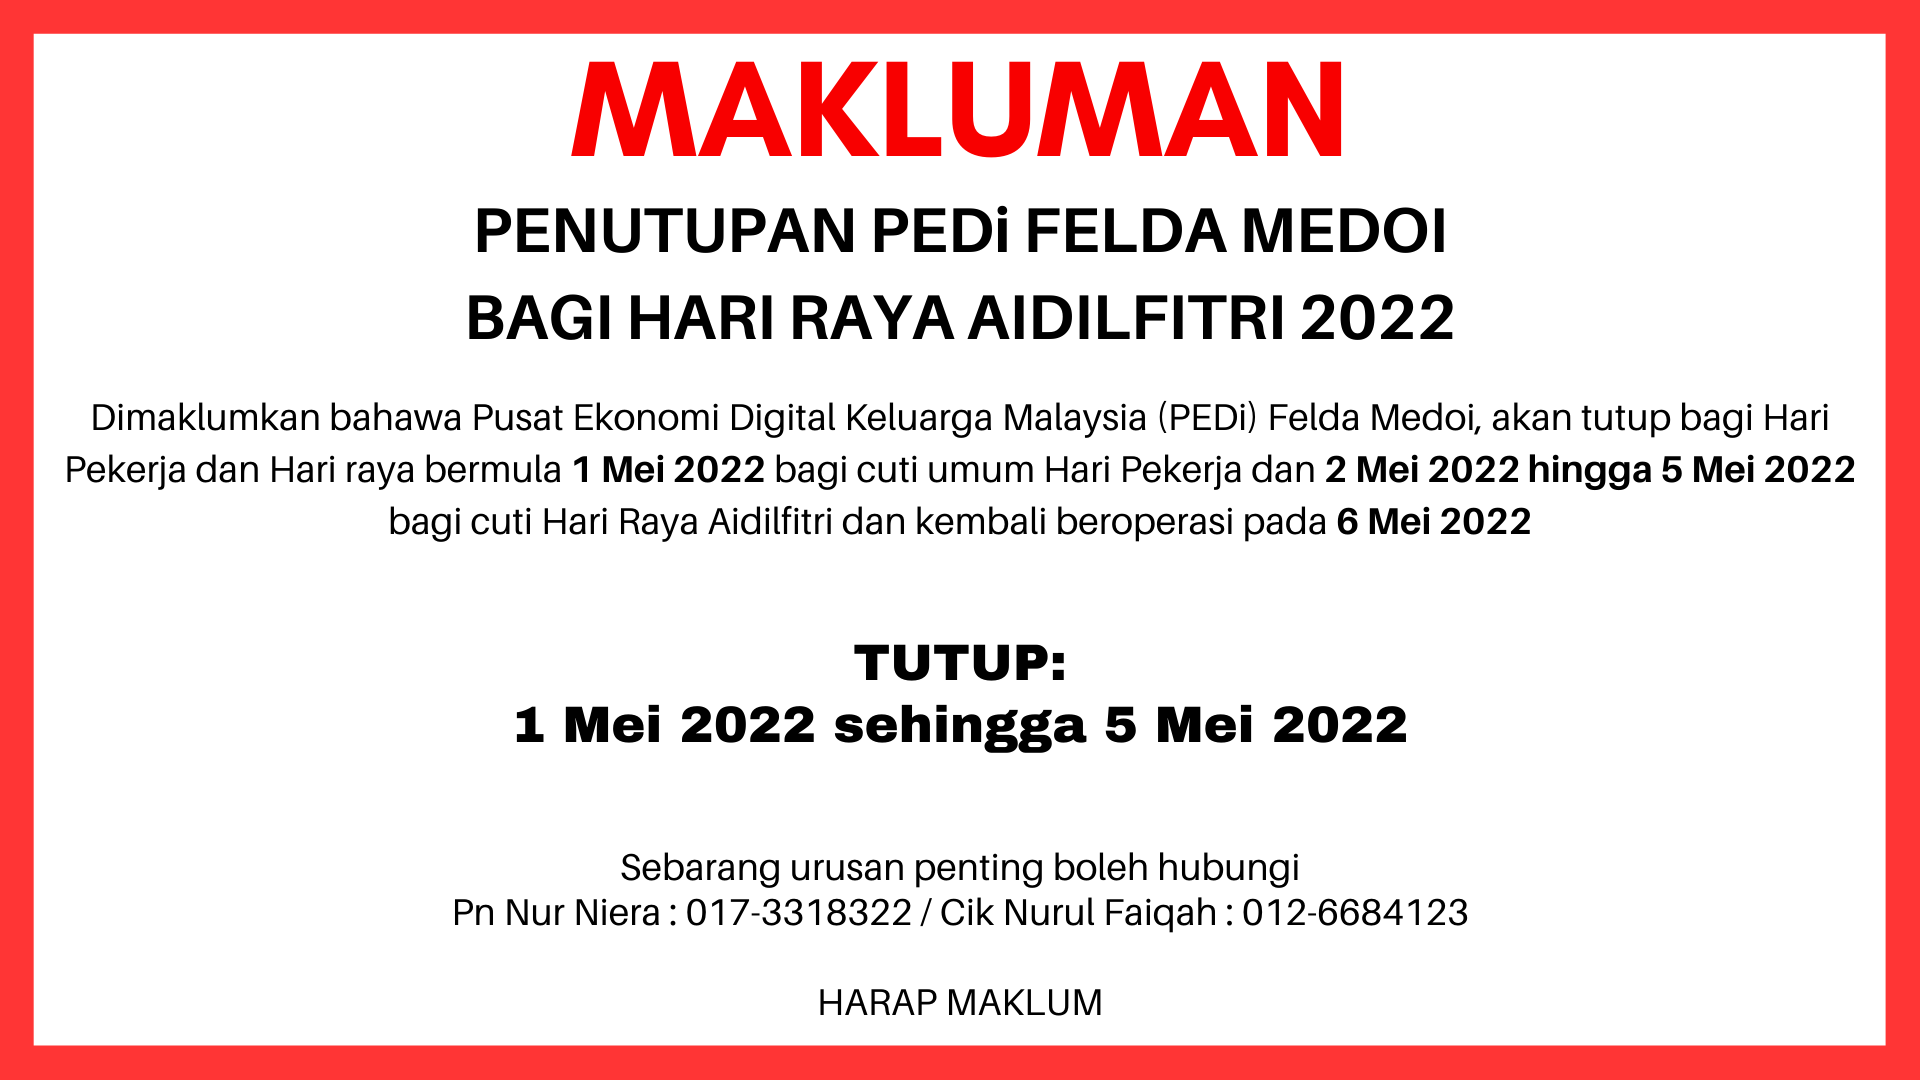 NOTIS PENUTUPAN HARI RAYA 2022